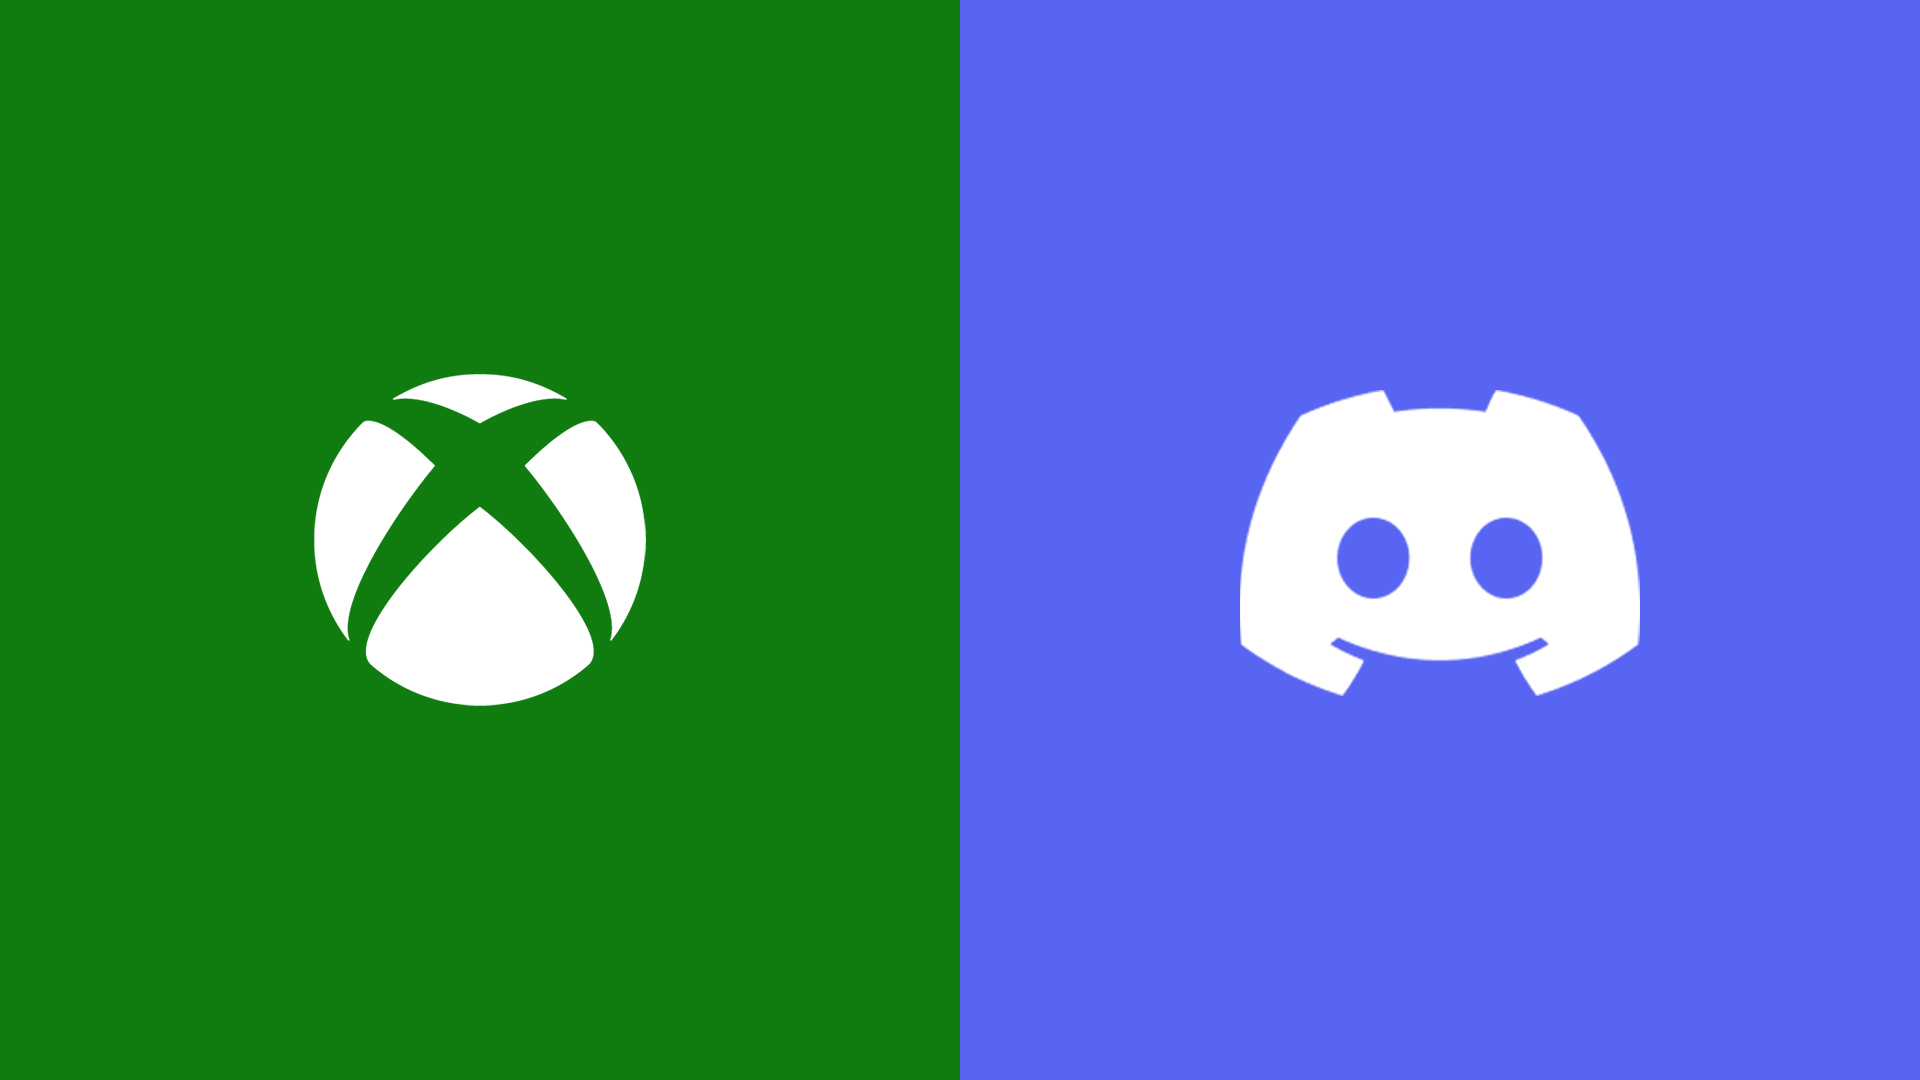 IMAGE(https://news.xbox.com/en-us/wp-content/uploads/sites/2/2022/07/Xbox-Discord-hero-logos-Final-and-Approved-da6b8ea5616266c62f6f.jpg)